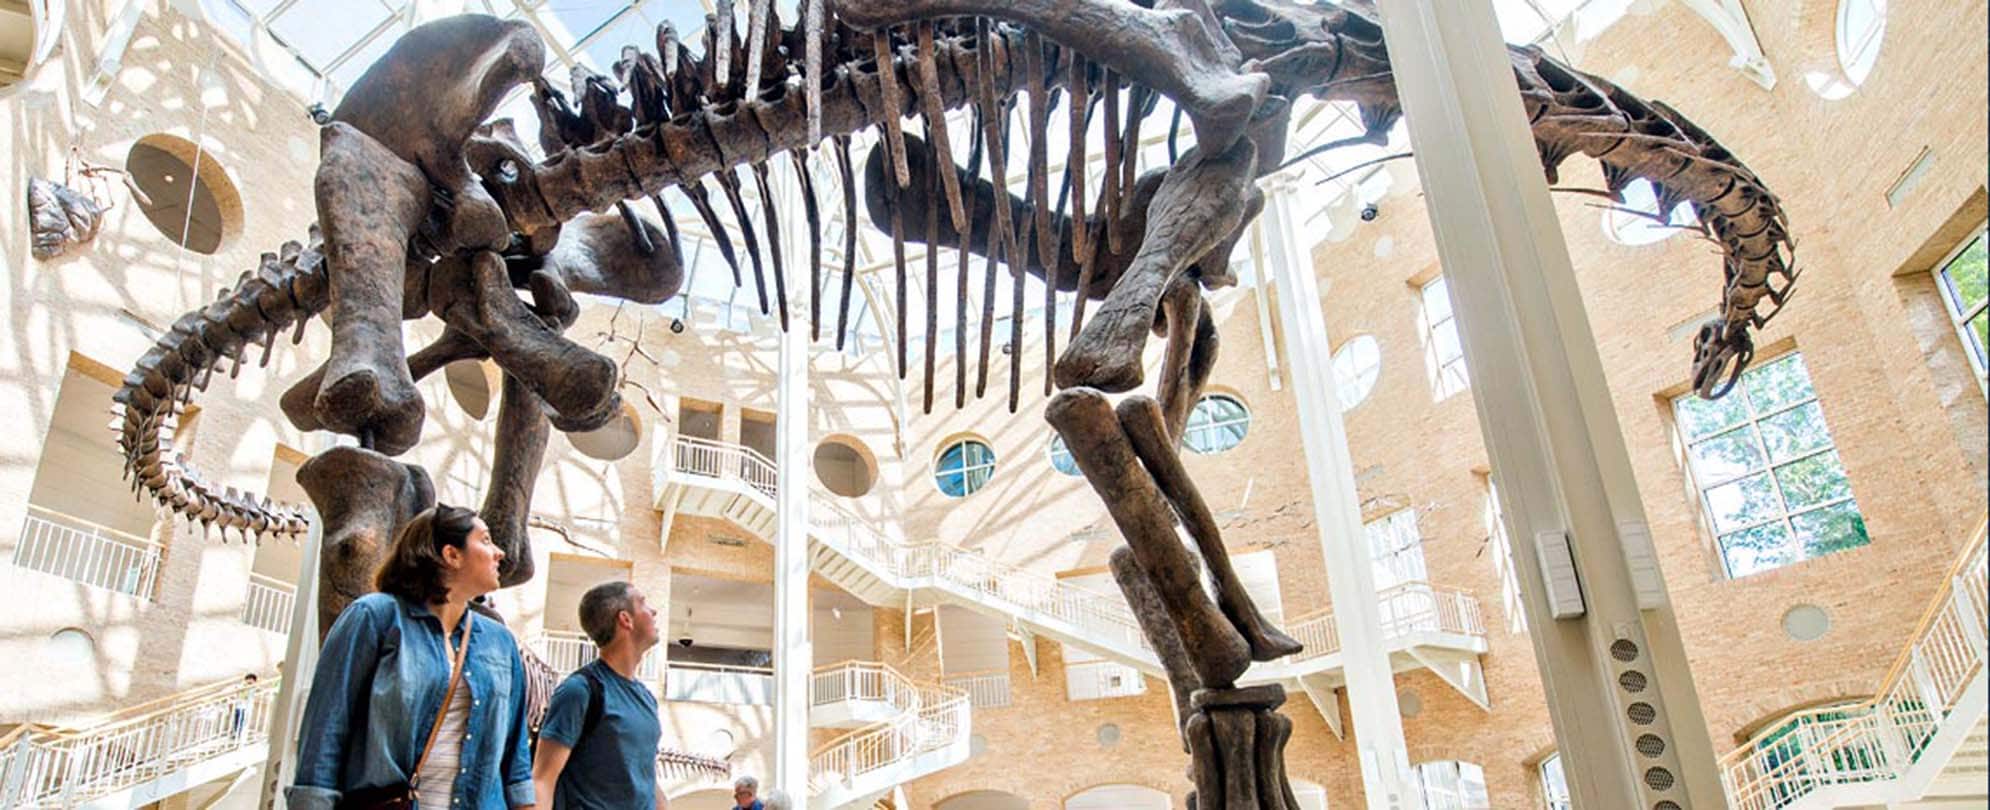 A Sauropoda dinosaur skeleton is on display at the Atlanta Kids Museum.